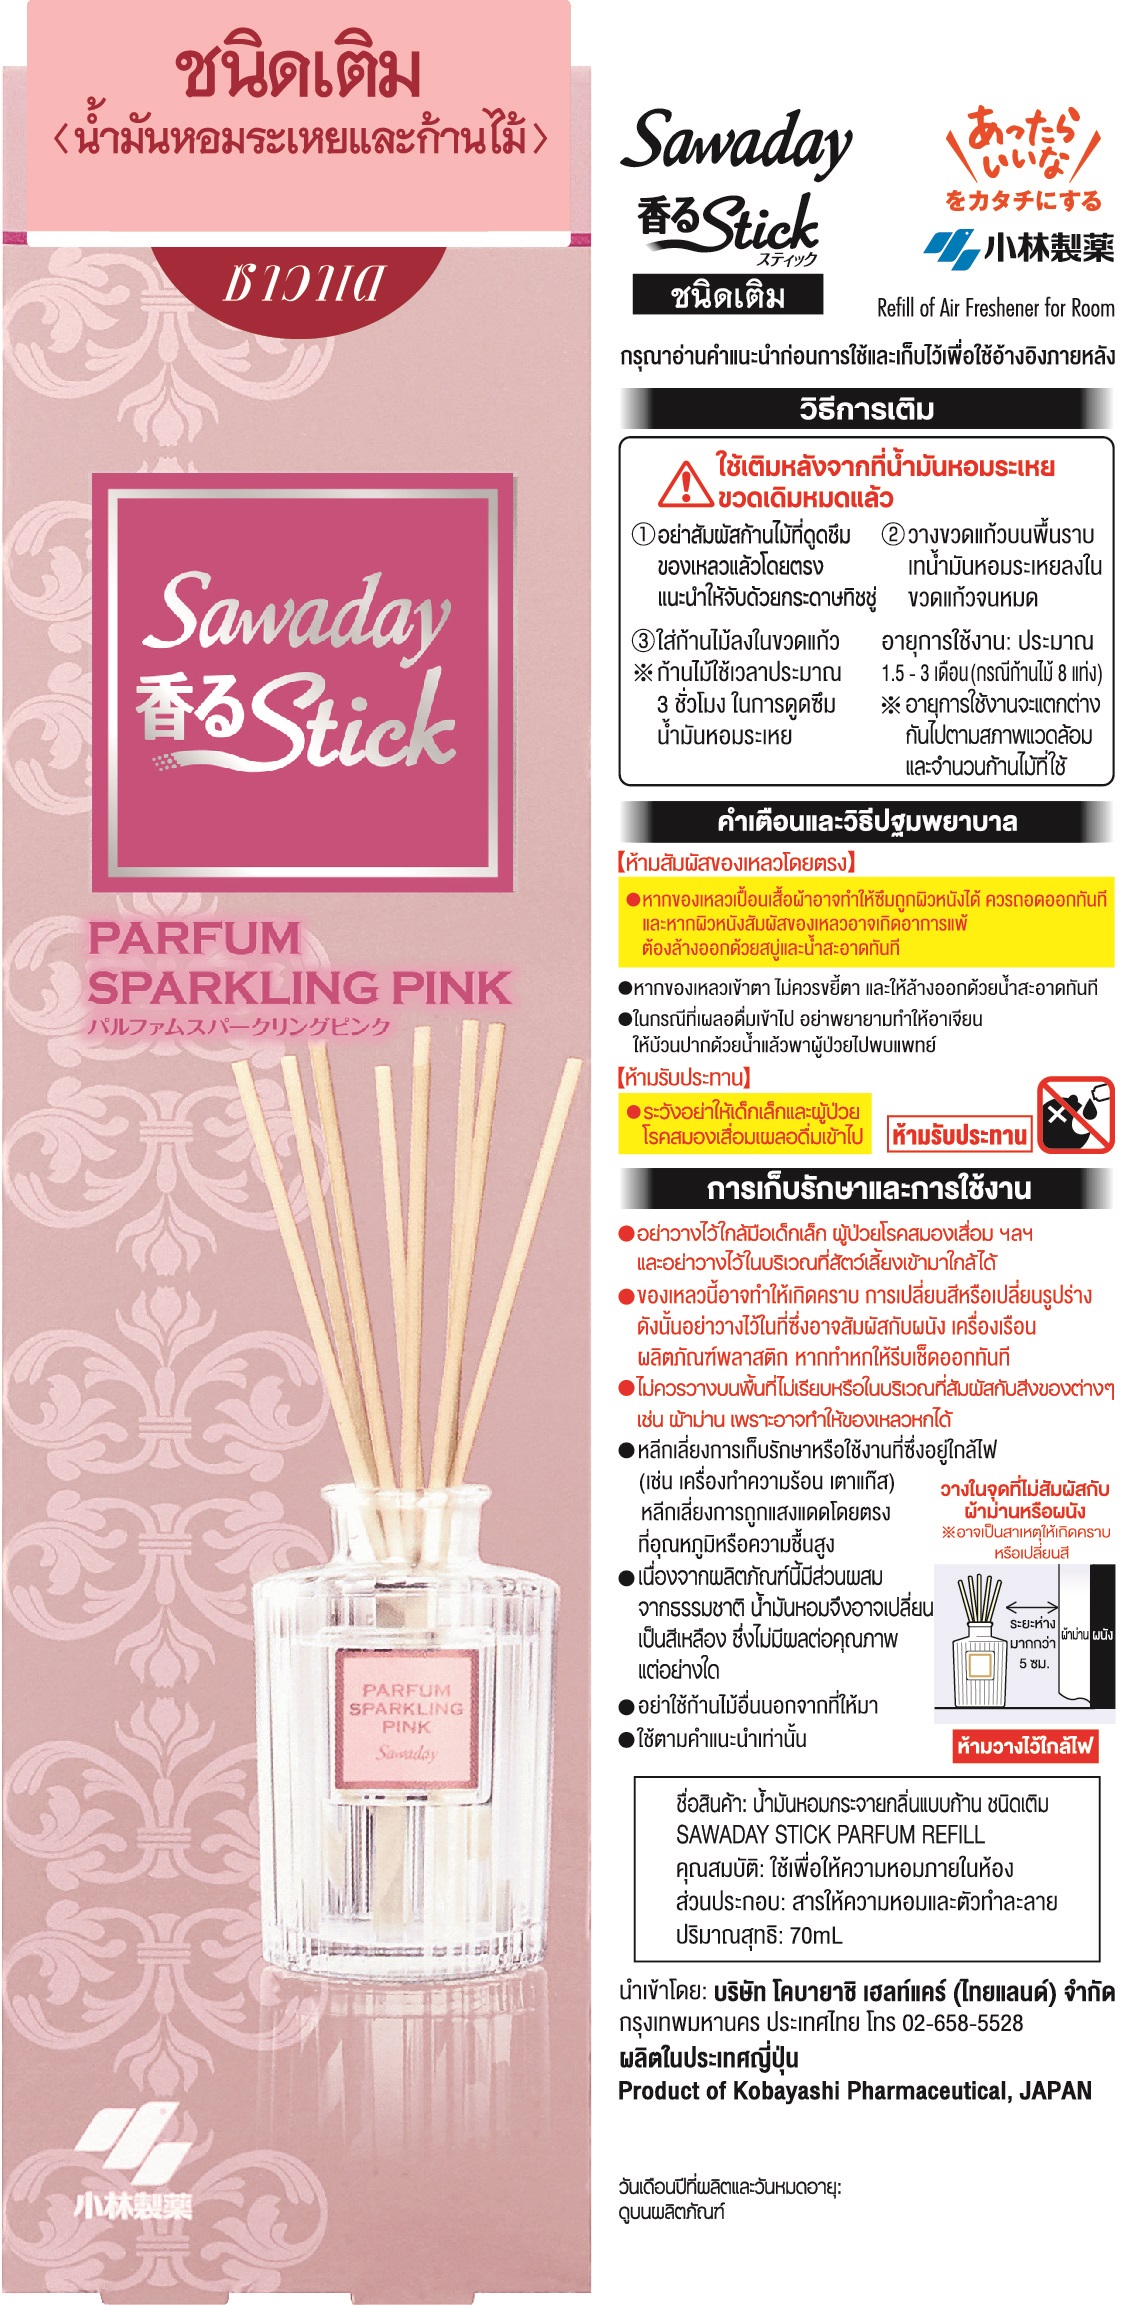 SAWADAY STICK PARFUM REFILL - SPARKLING PINK